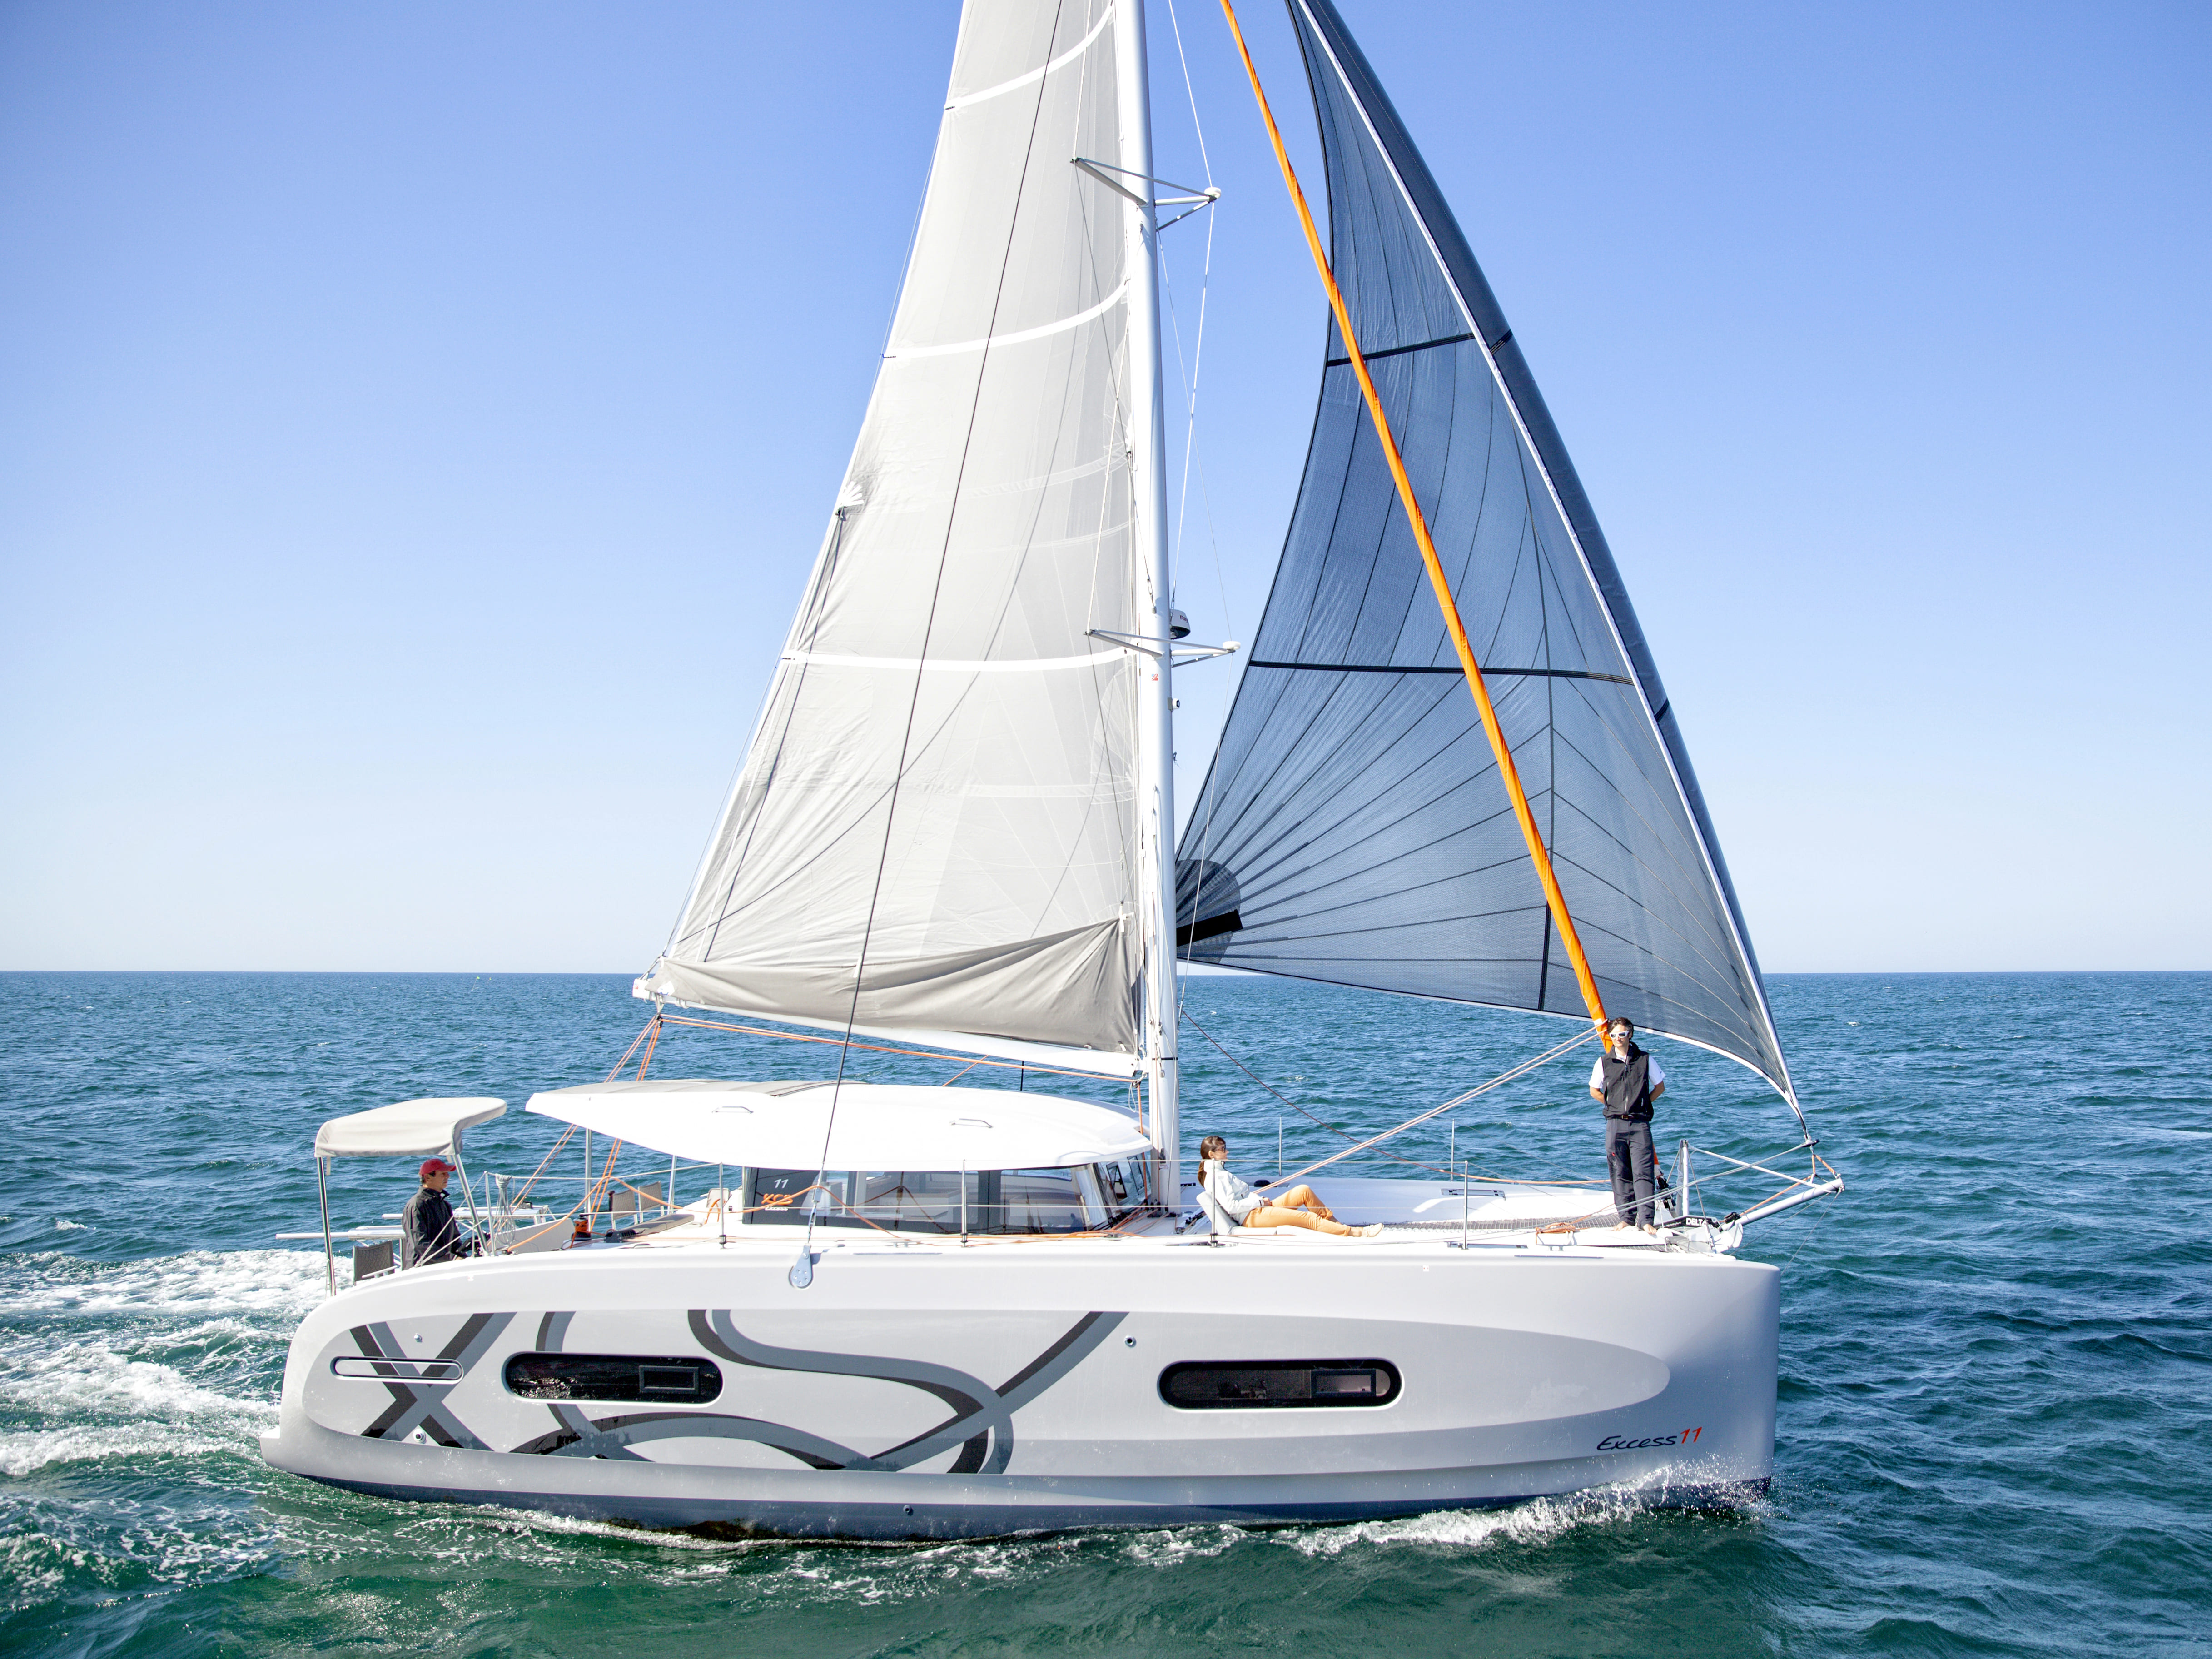 Excess 11 - Yacht Charter Denia & Boat hire in Spain Costa Blanca Denia Marina El Portet 1